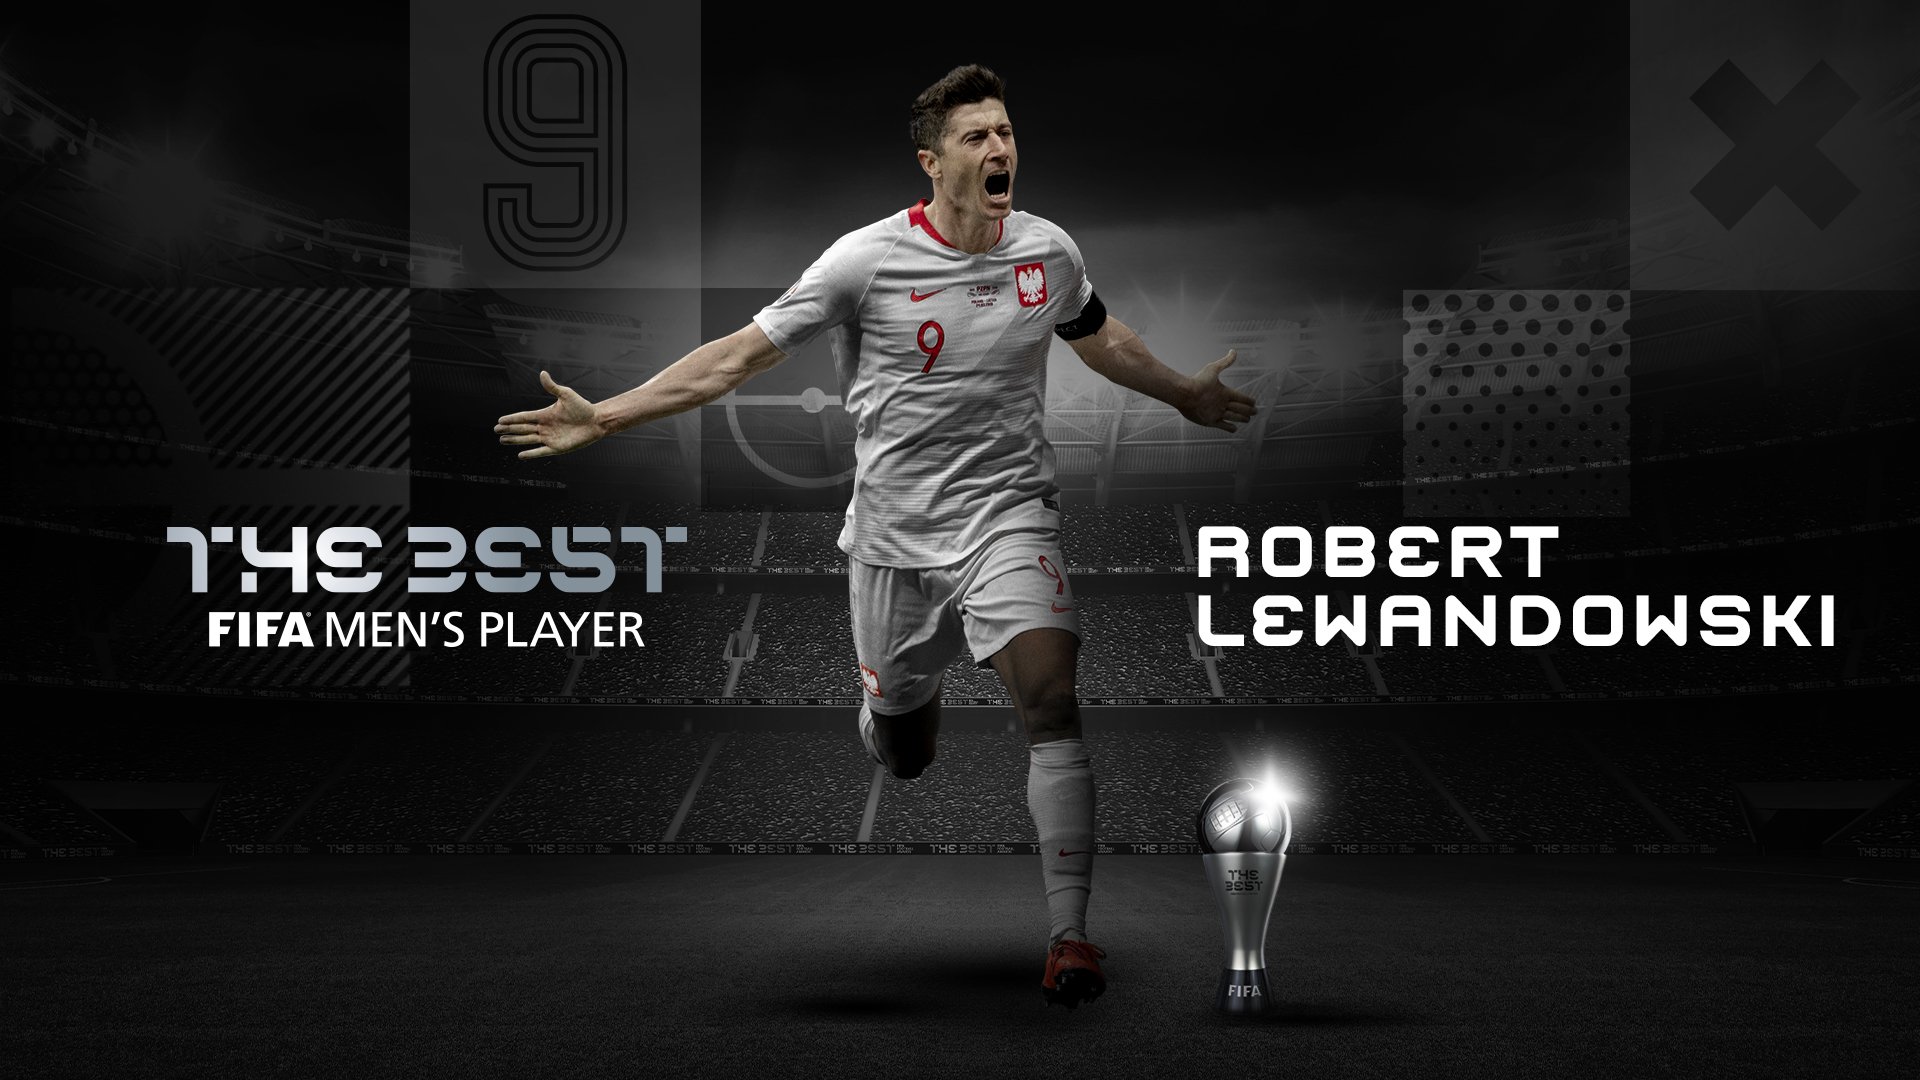 Lewandowski ganador del premio The Best a mejor futbolista del mundo